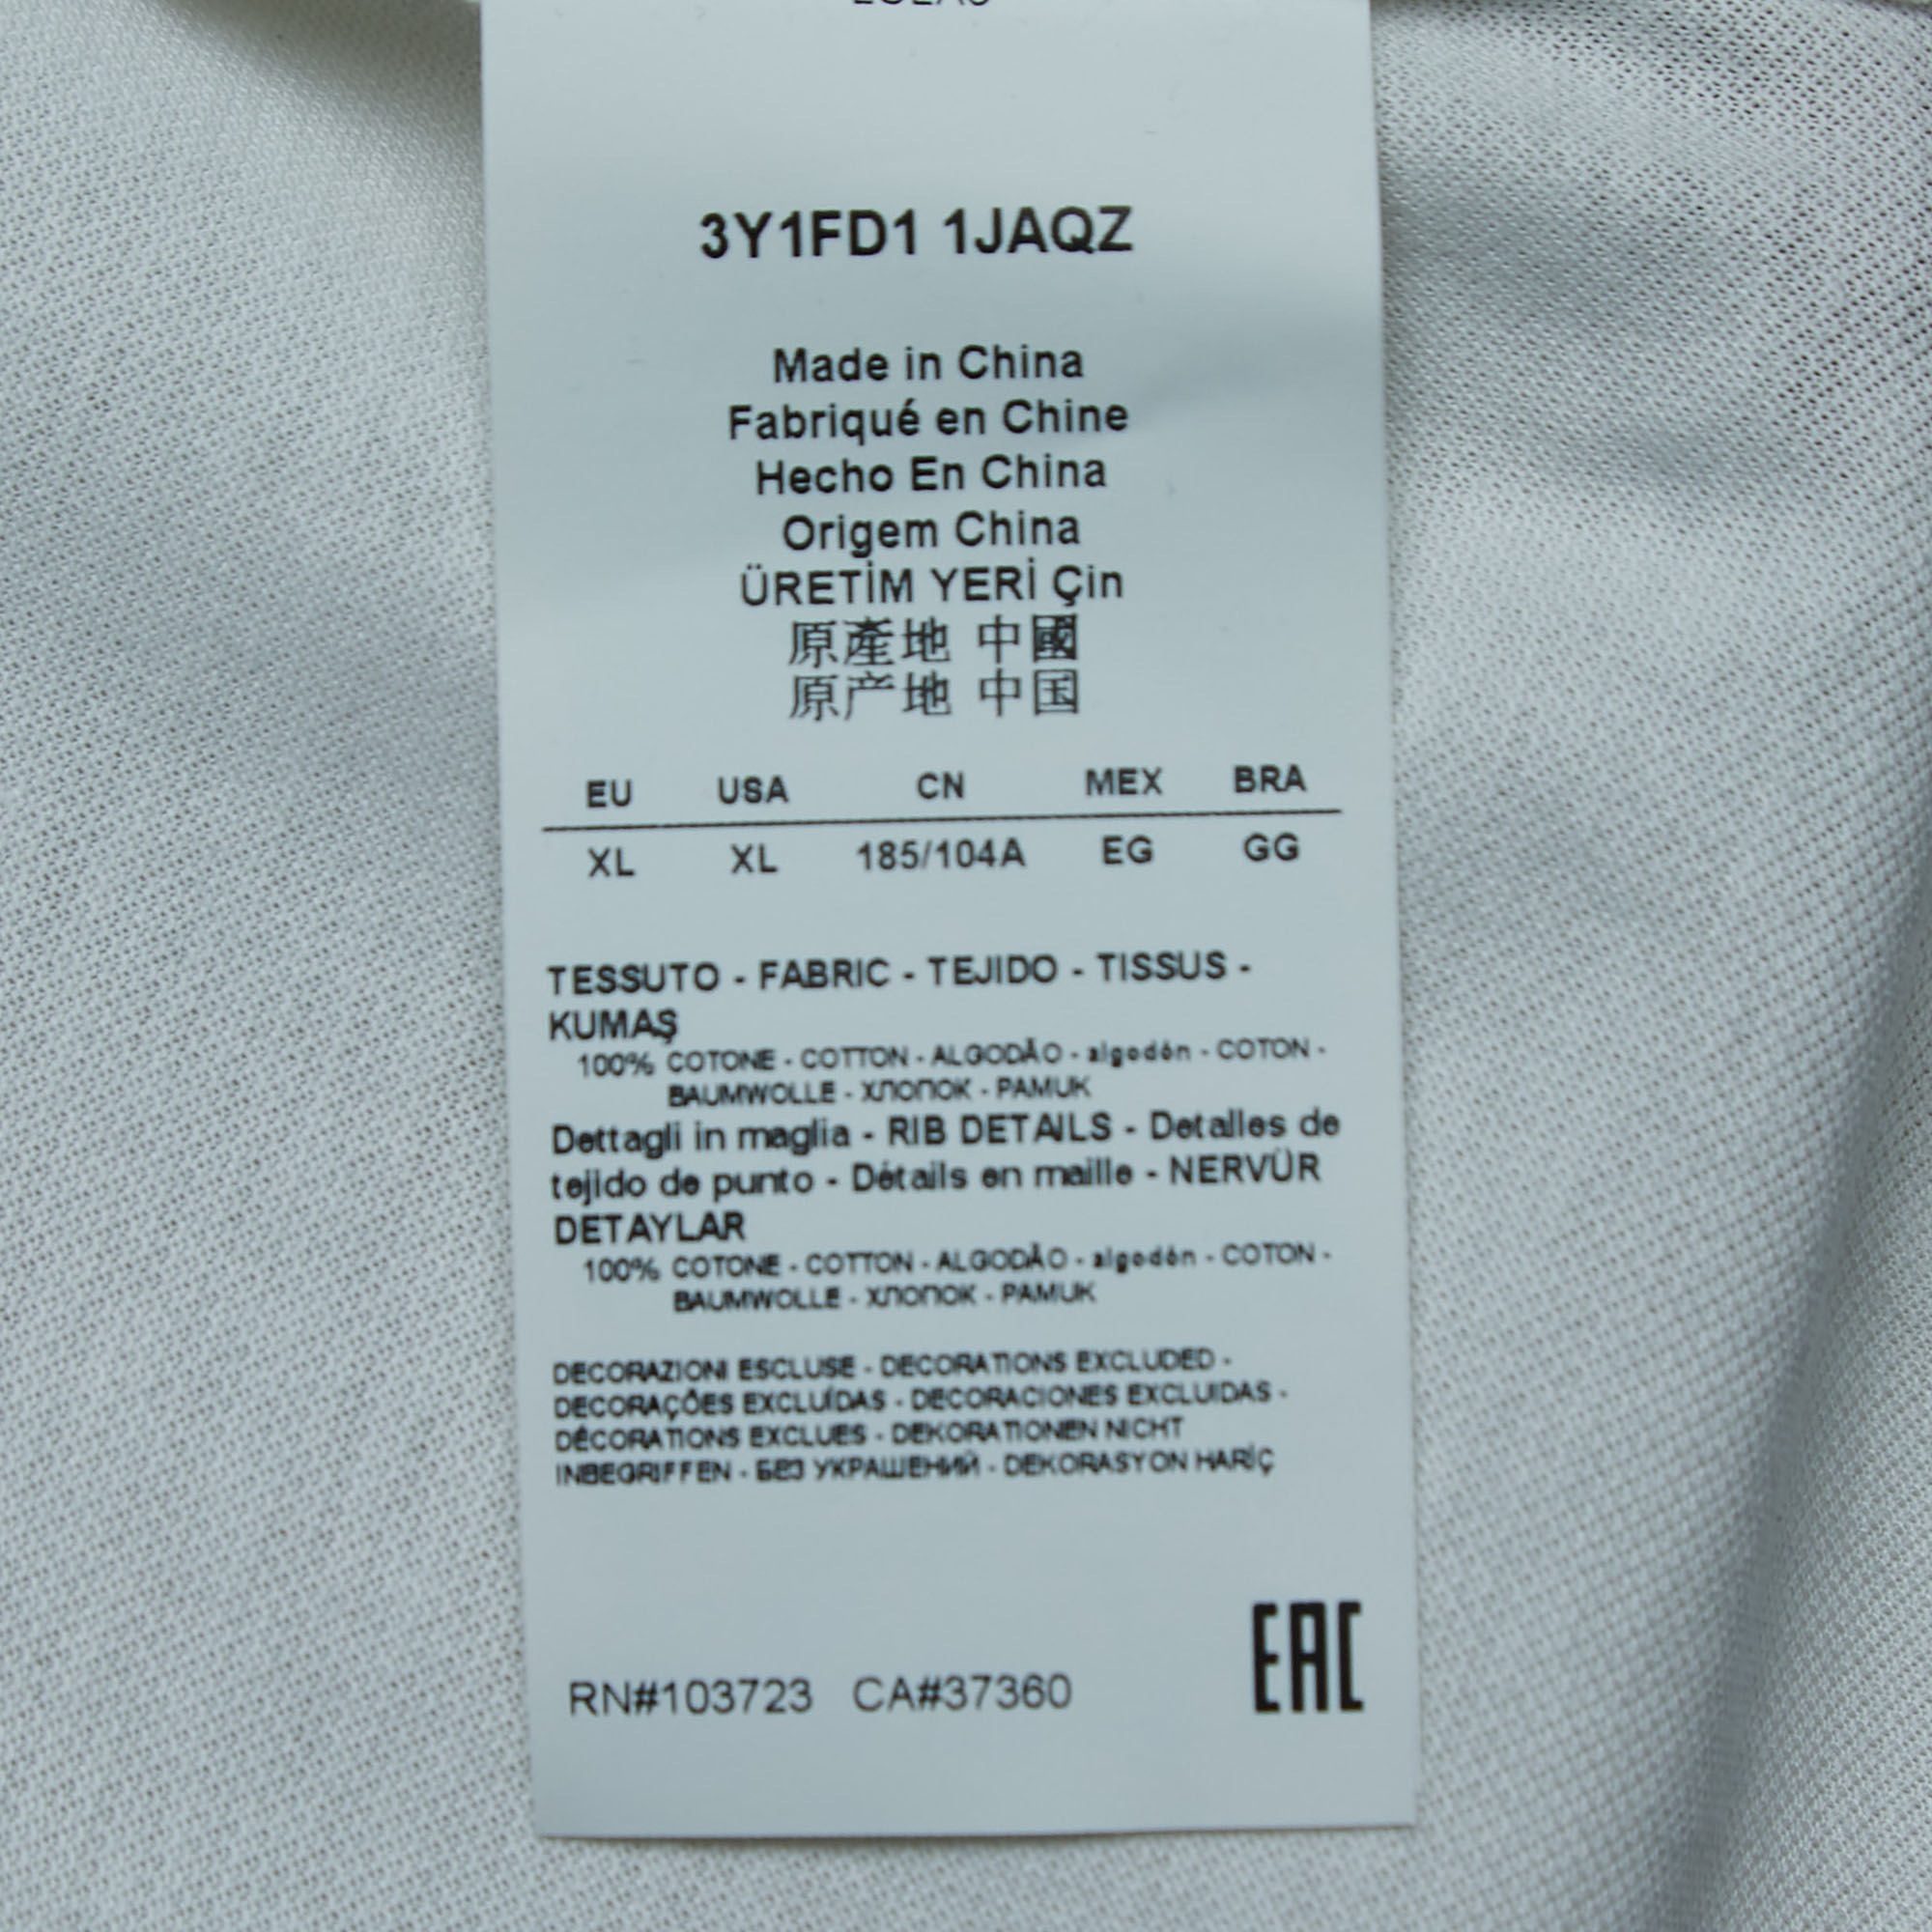 Emporio Armani White Cotton Pique Logo Patch Detailed Polo T-Shirt XL